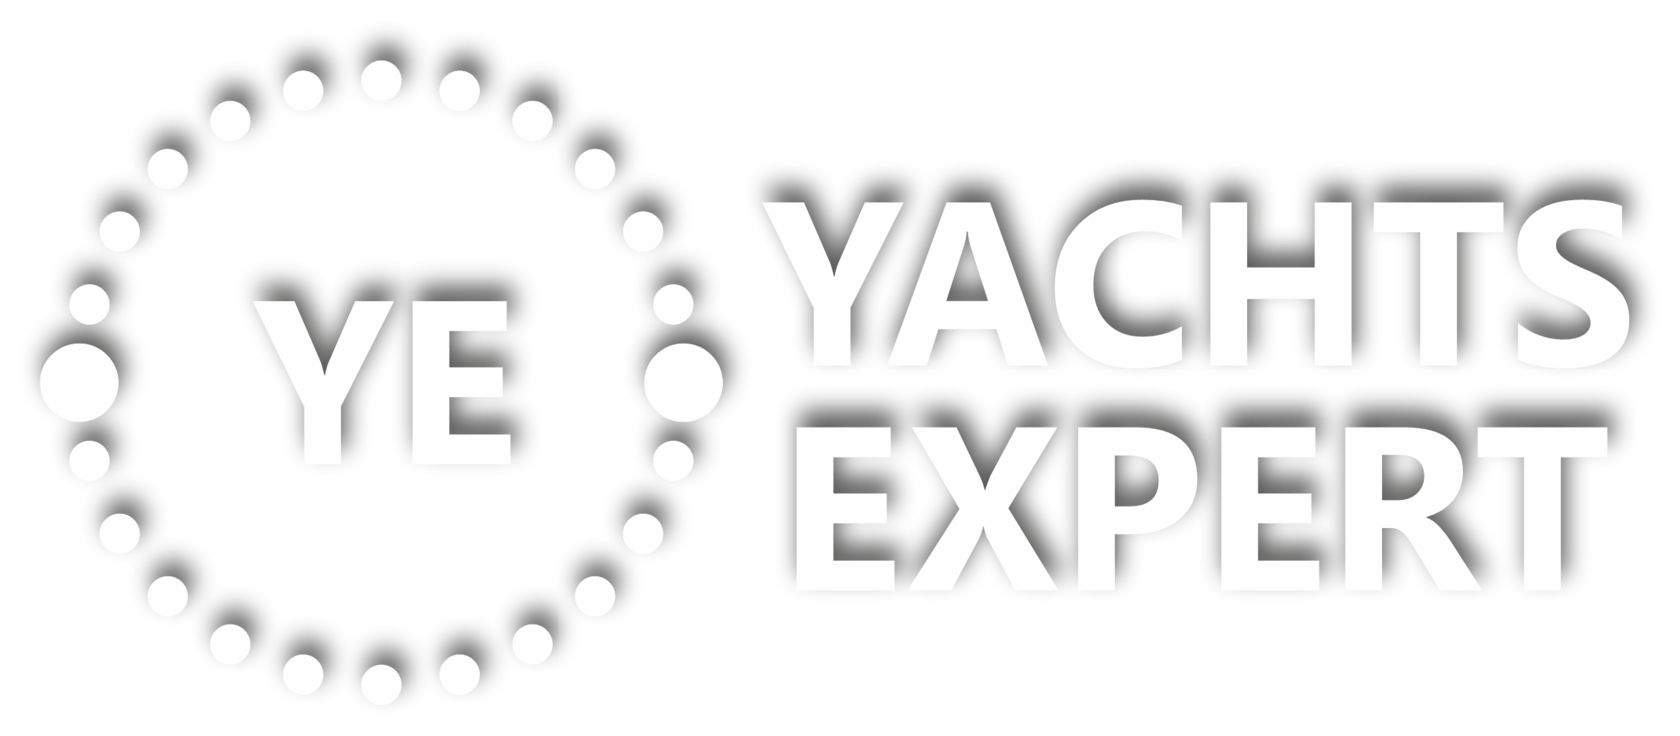 yachts expert